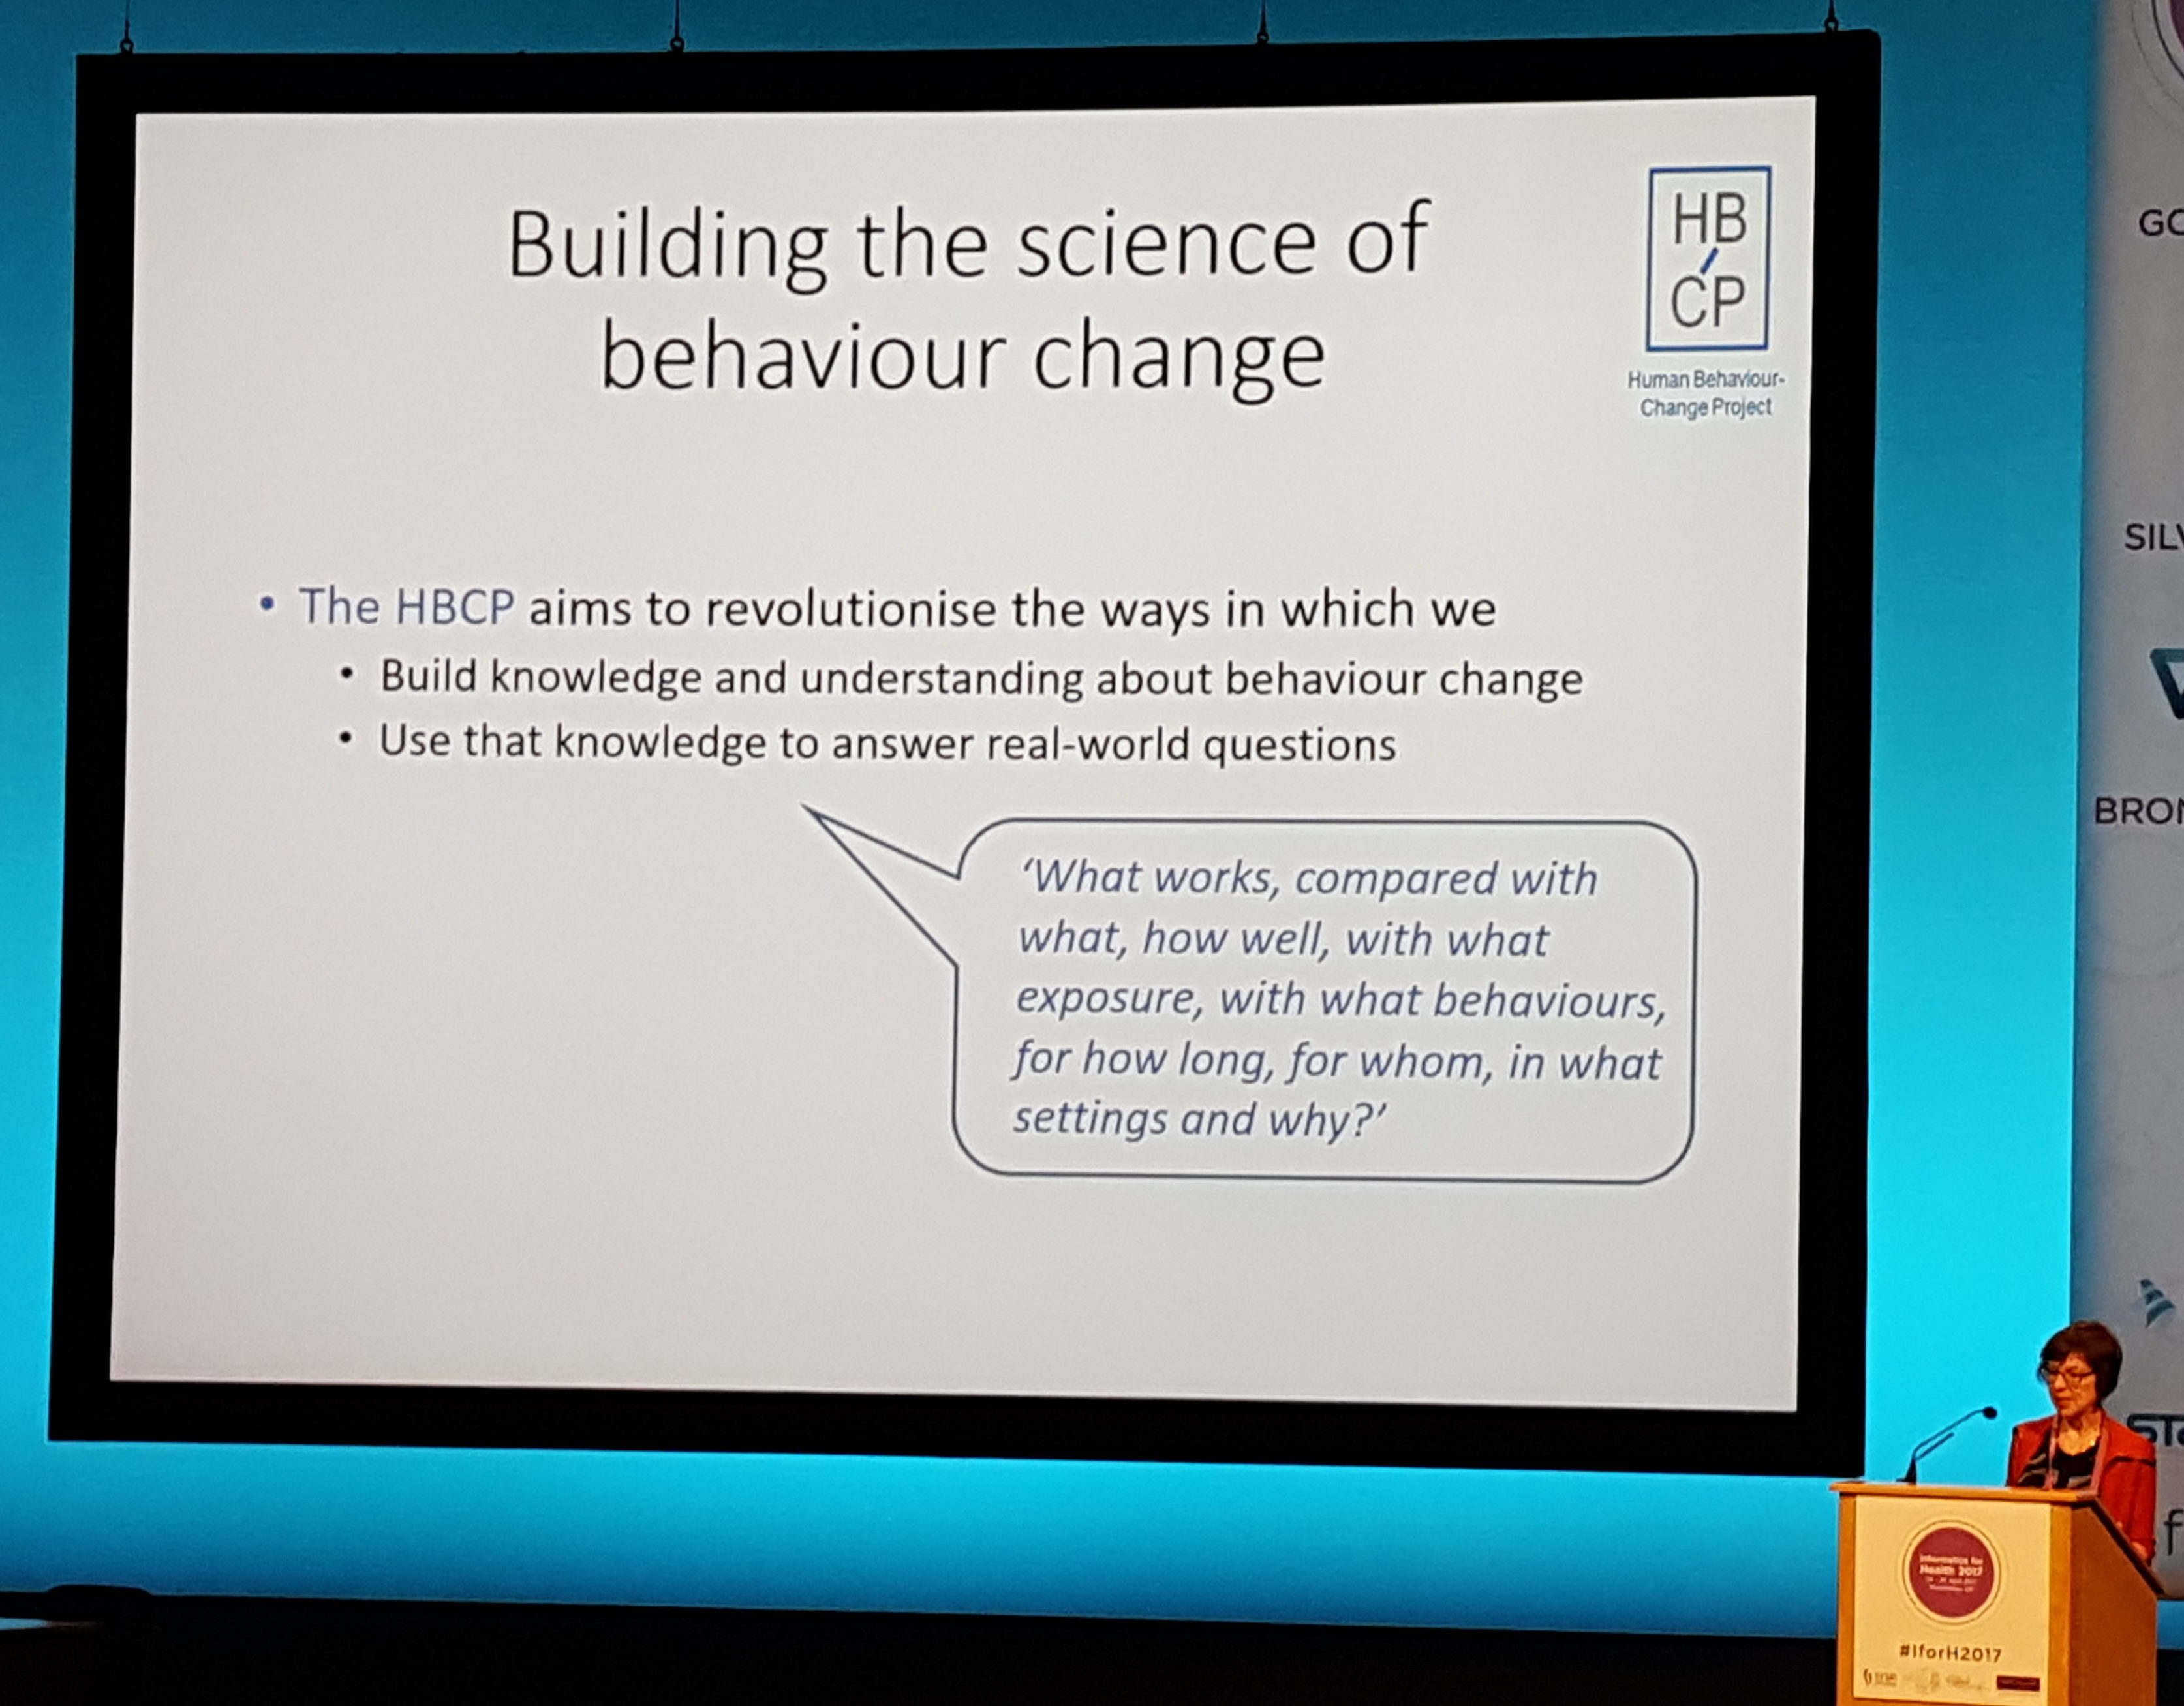 Susan Michie, University College London talks about the Human Behavior-Change Project